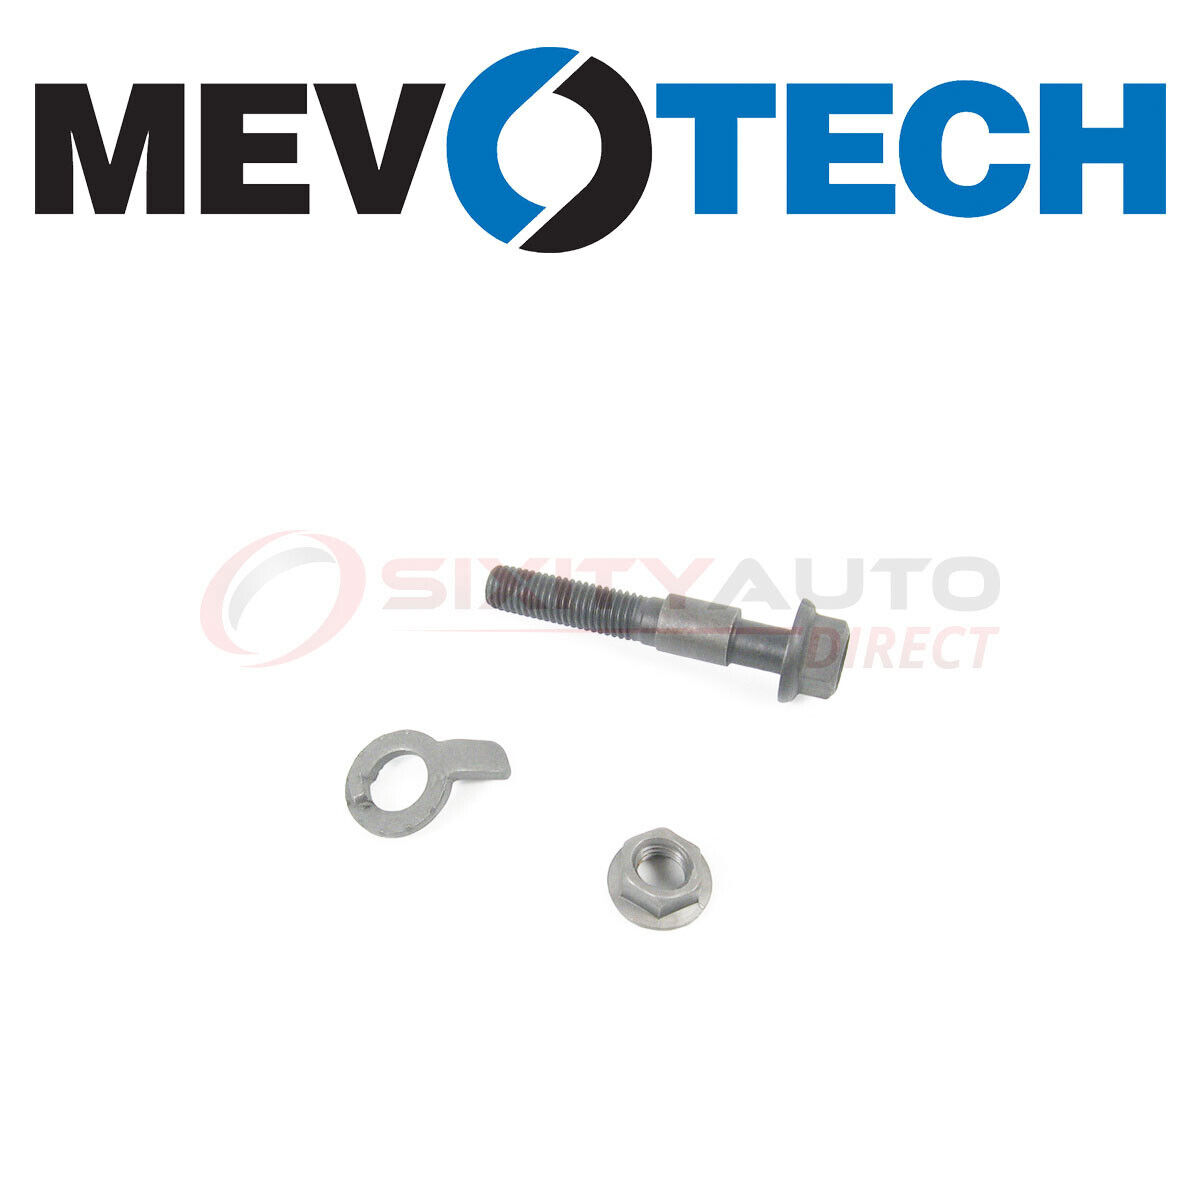 Mevotech Alignment Camber Kit for 1998 Volvo S90 2.9L L6 - Wheels Tires pq